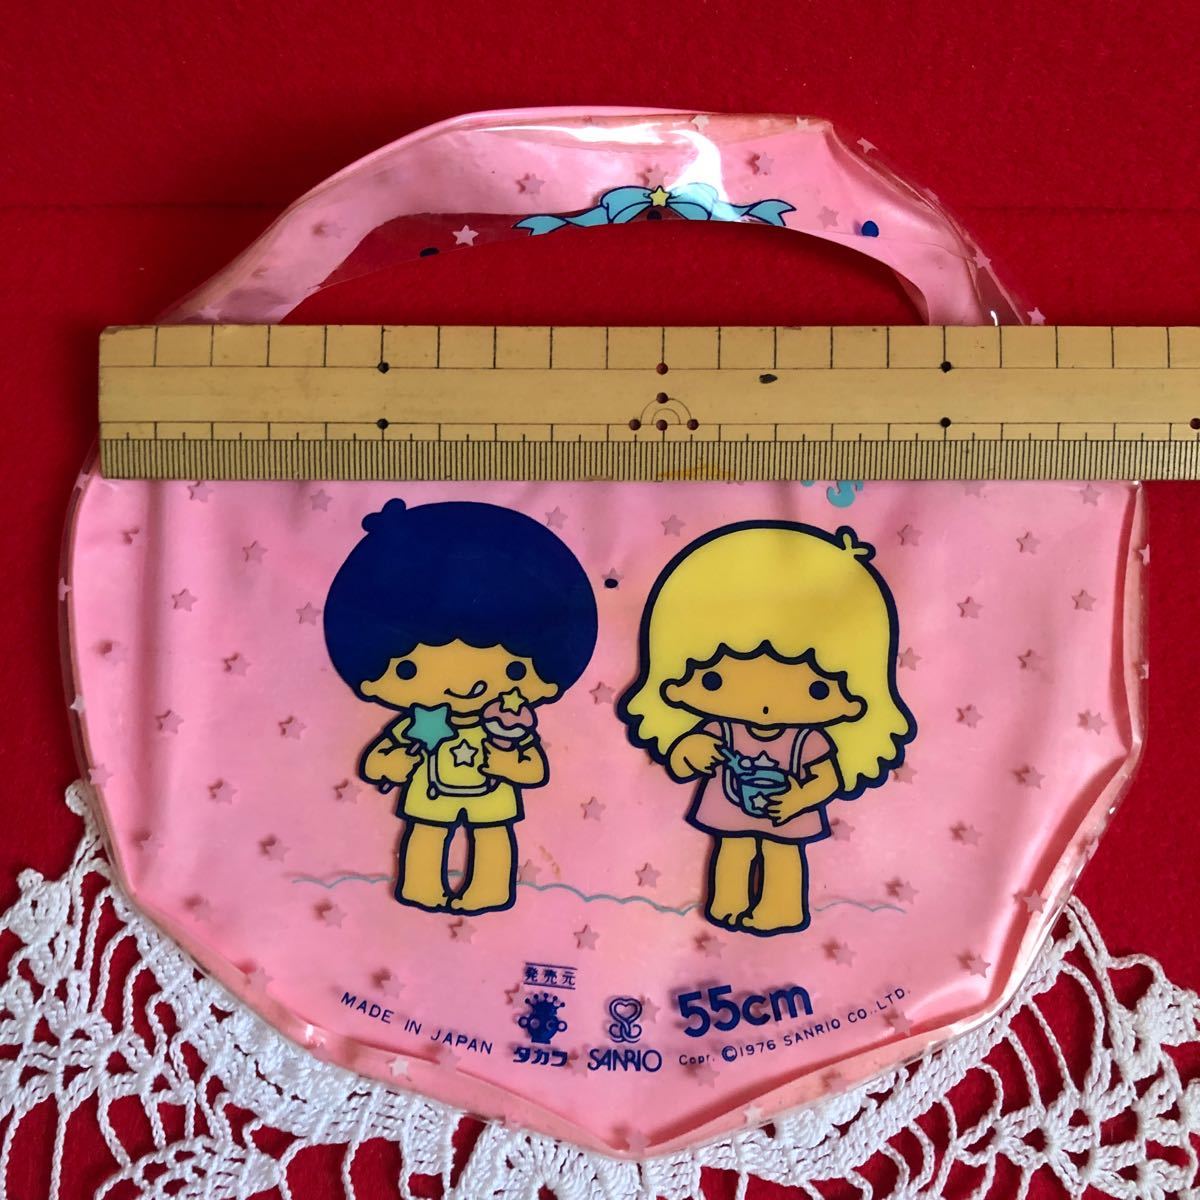  Little Twin Stars ki Kirara 4 point set Mini vinyl bag can case extra Showa Retro that time thing old Logo 1976 year Sanrio 